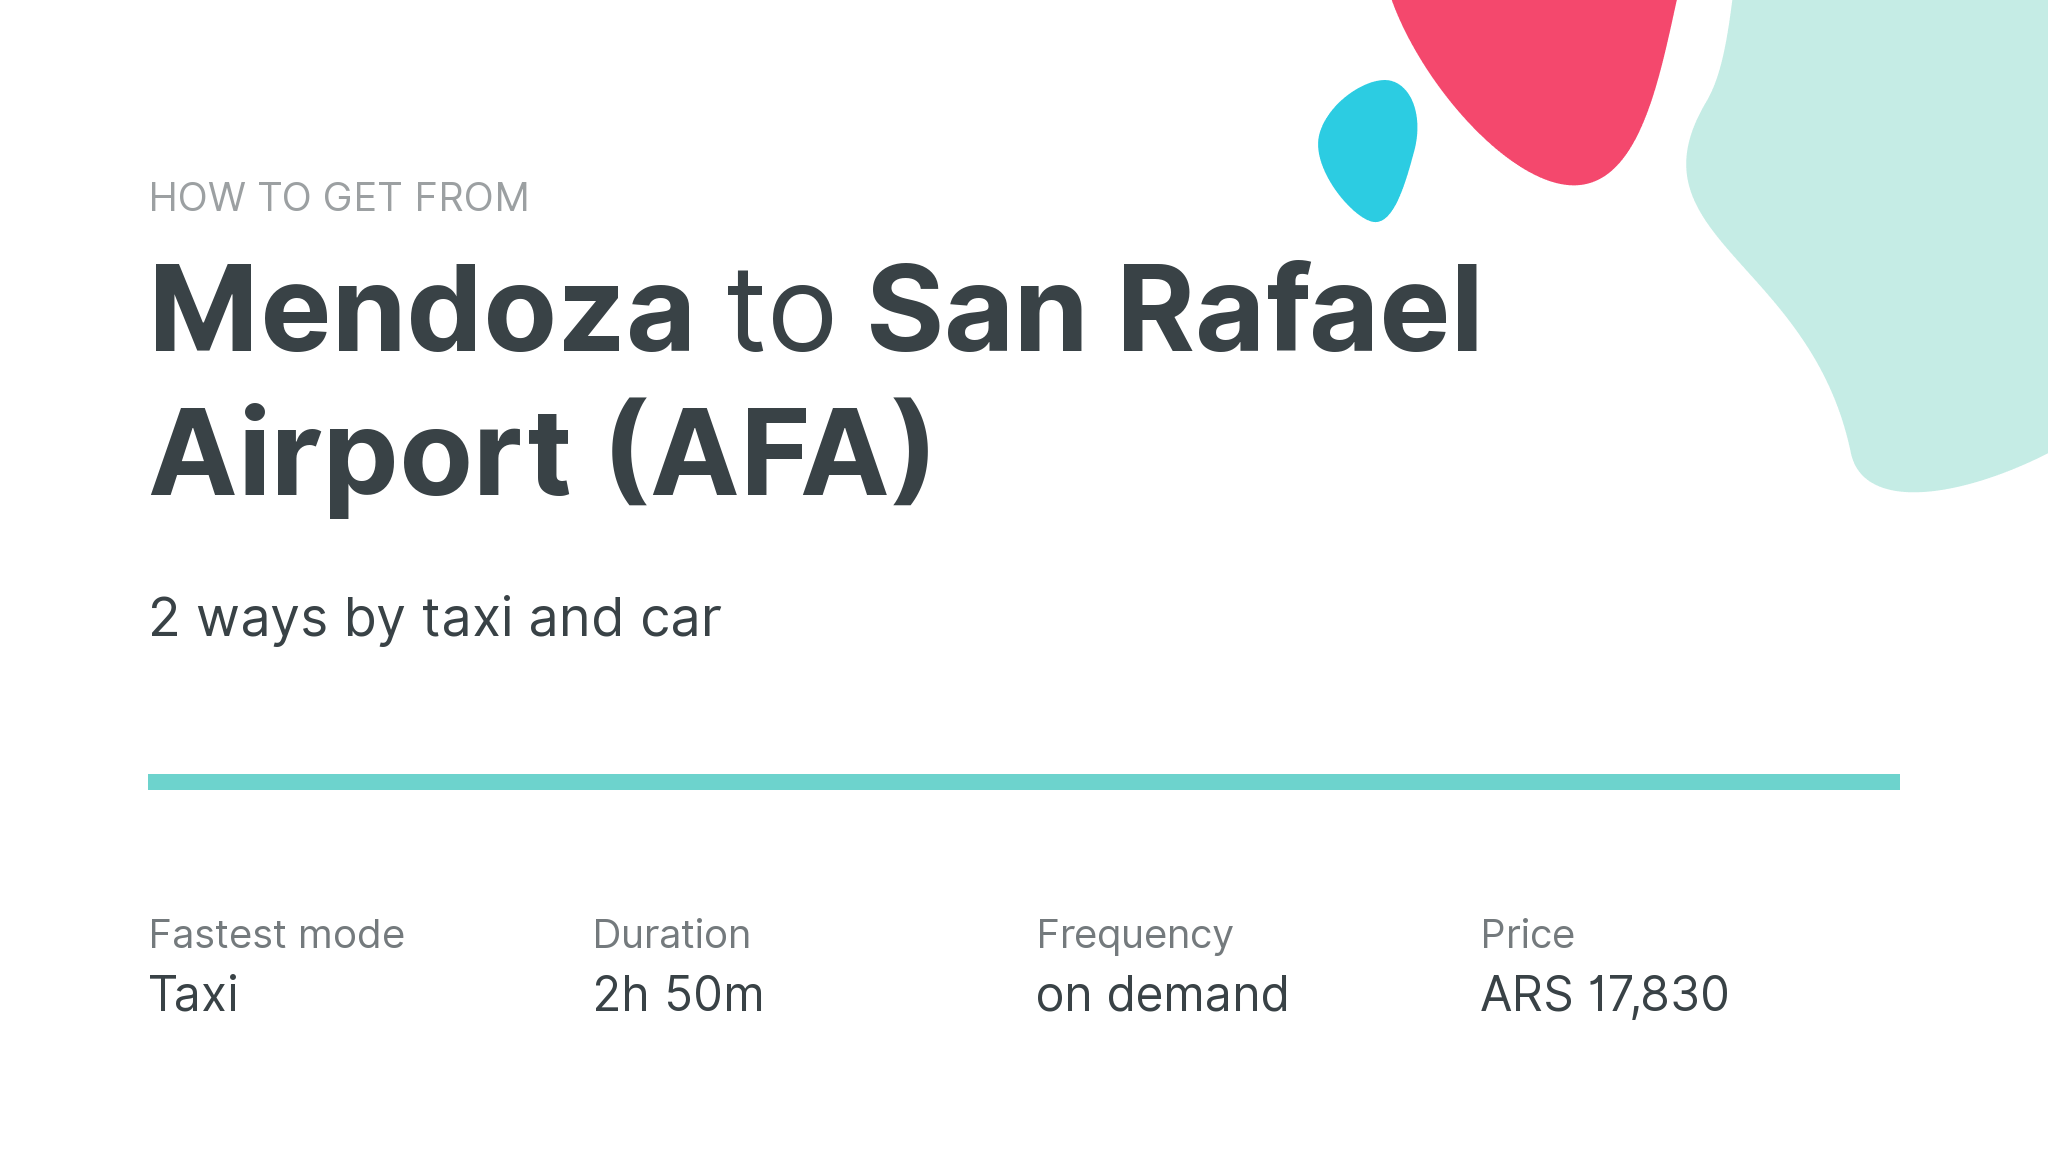 How do I get from Mendoza to San Rafael Airport (AFA)